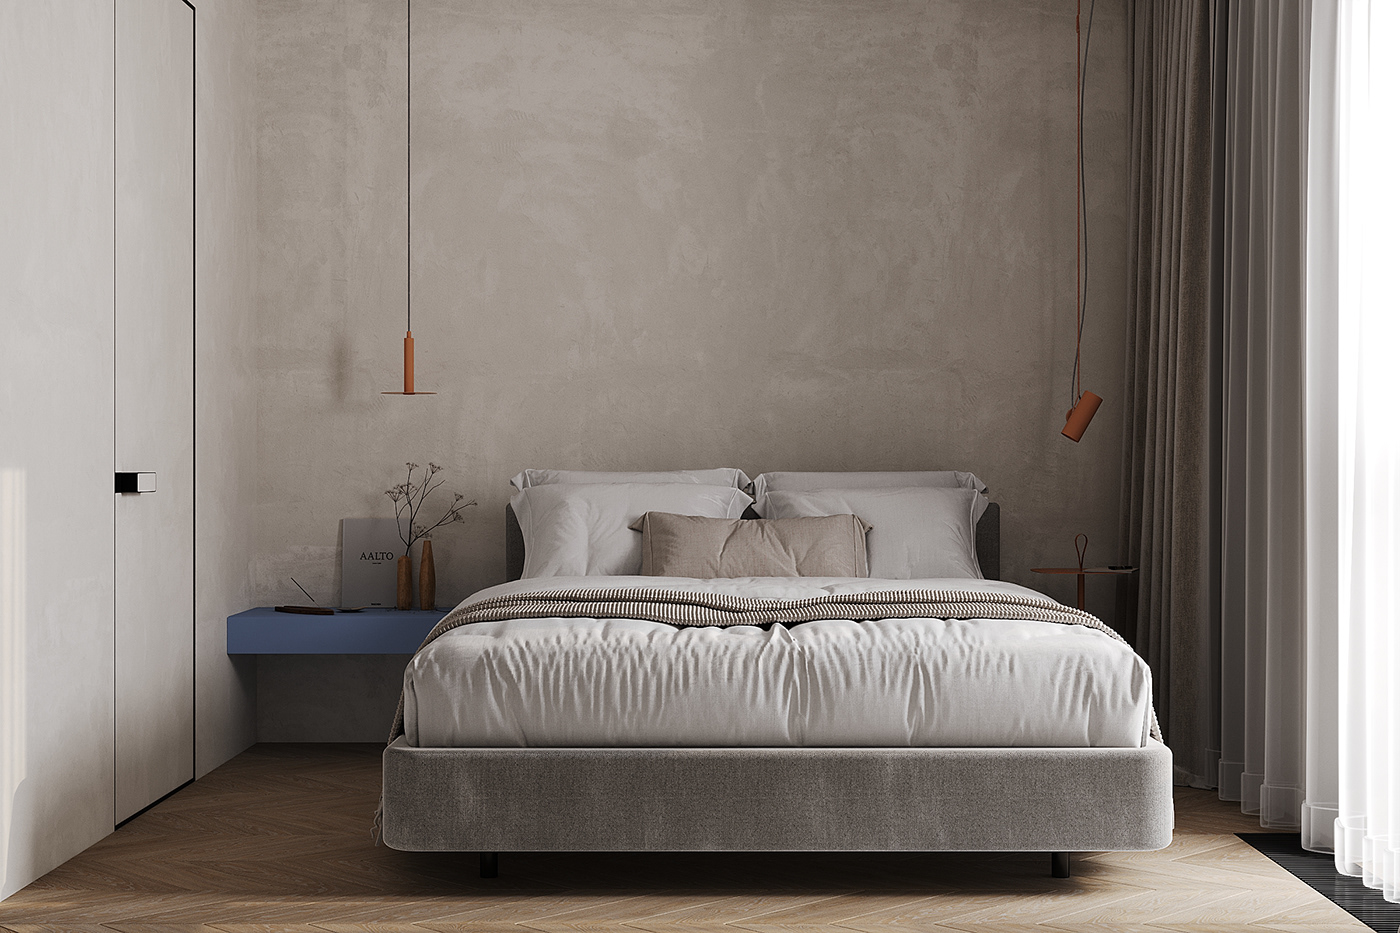 3ds max architecture archviz bedroom designs  Bedroom interior CGI cozy interior interiors visualization